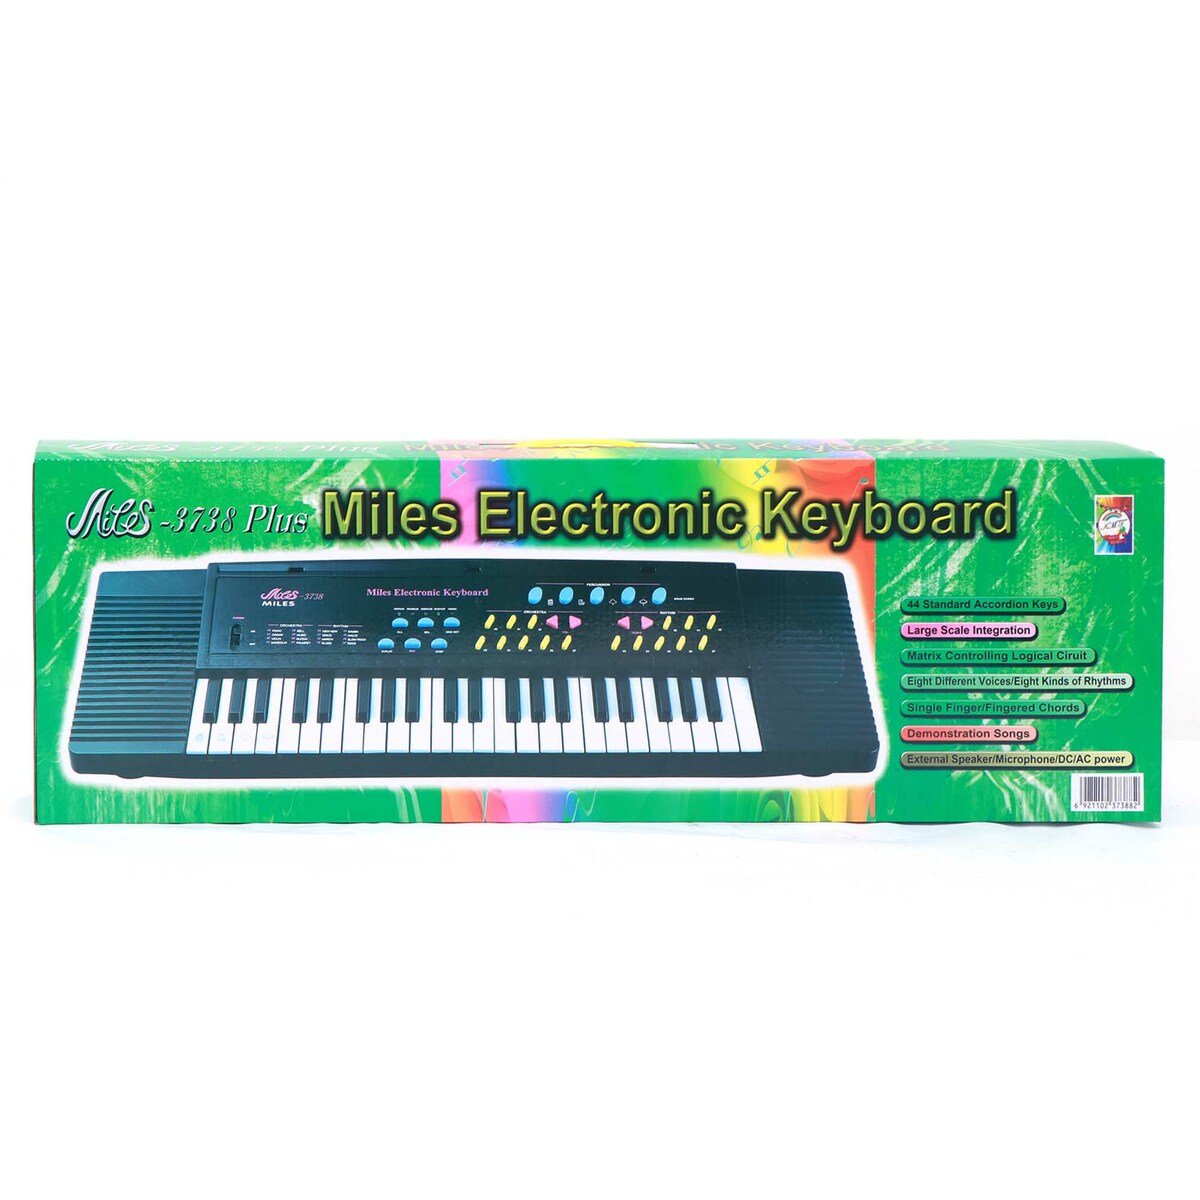 ABT Miles Electronic Keyboard 3738